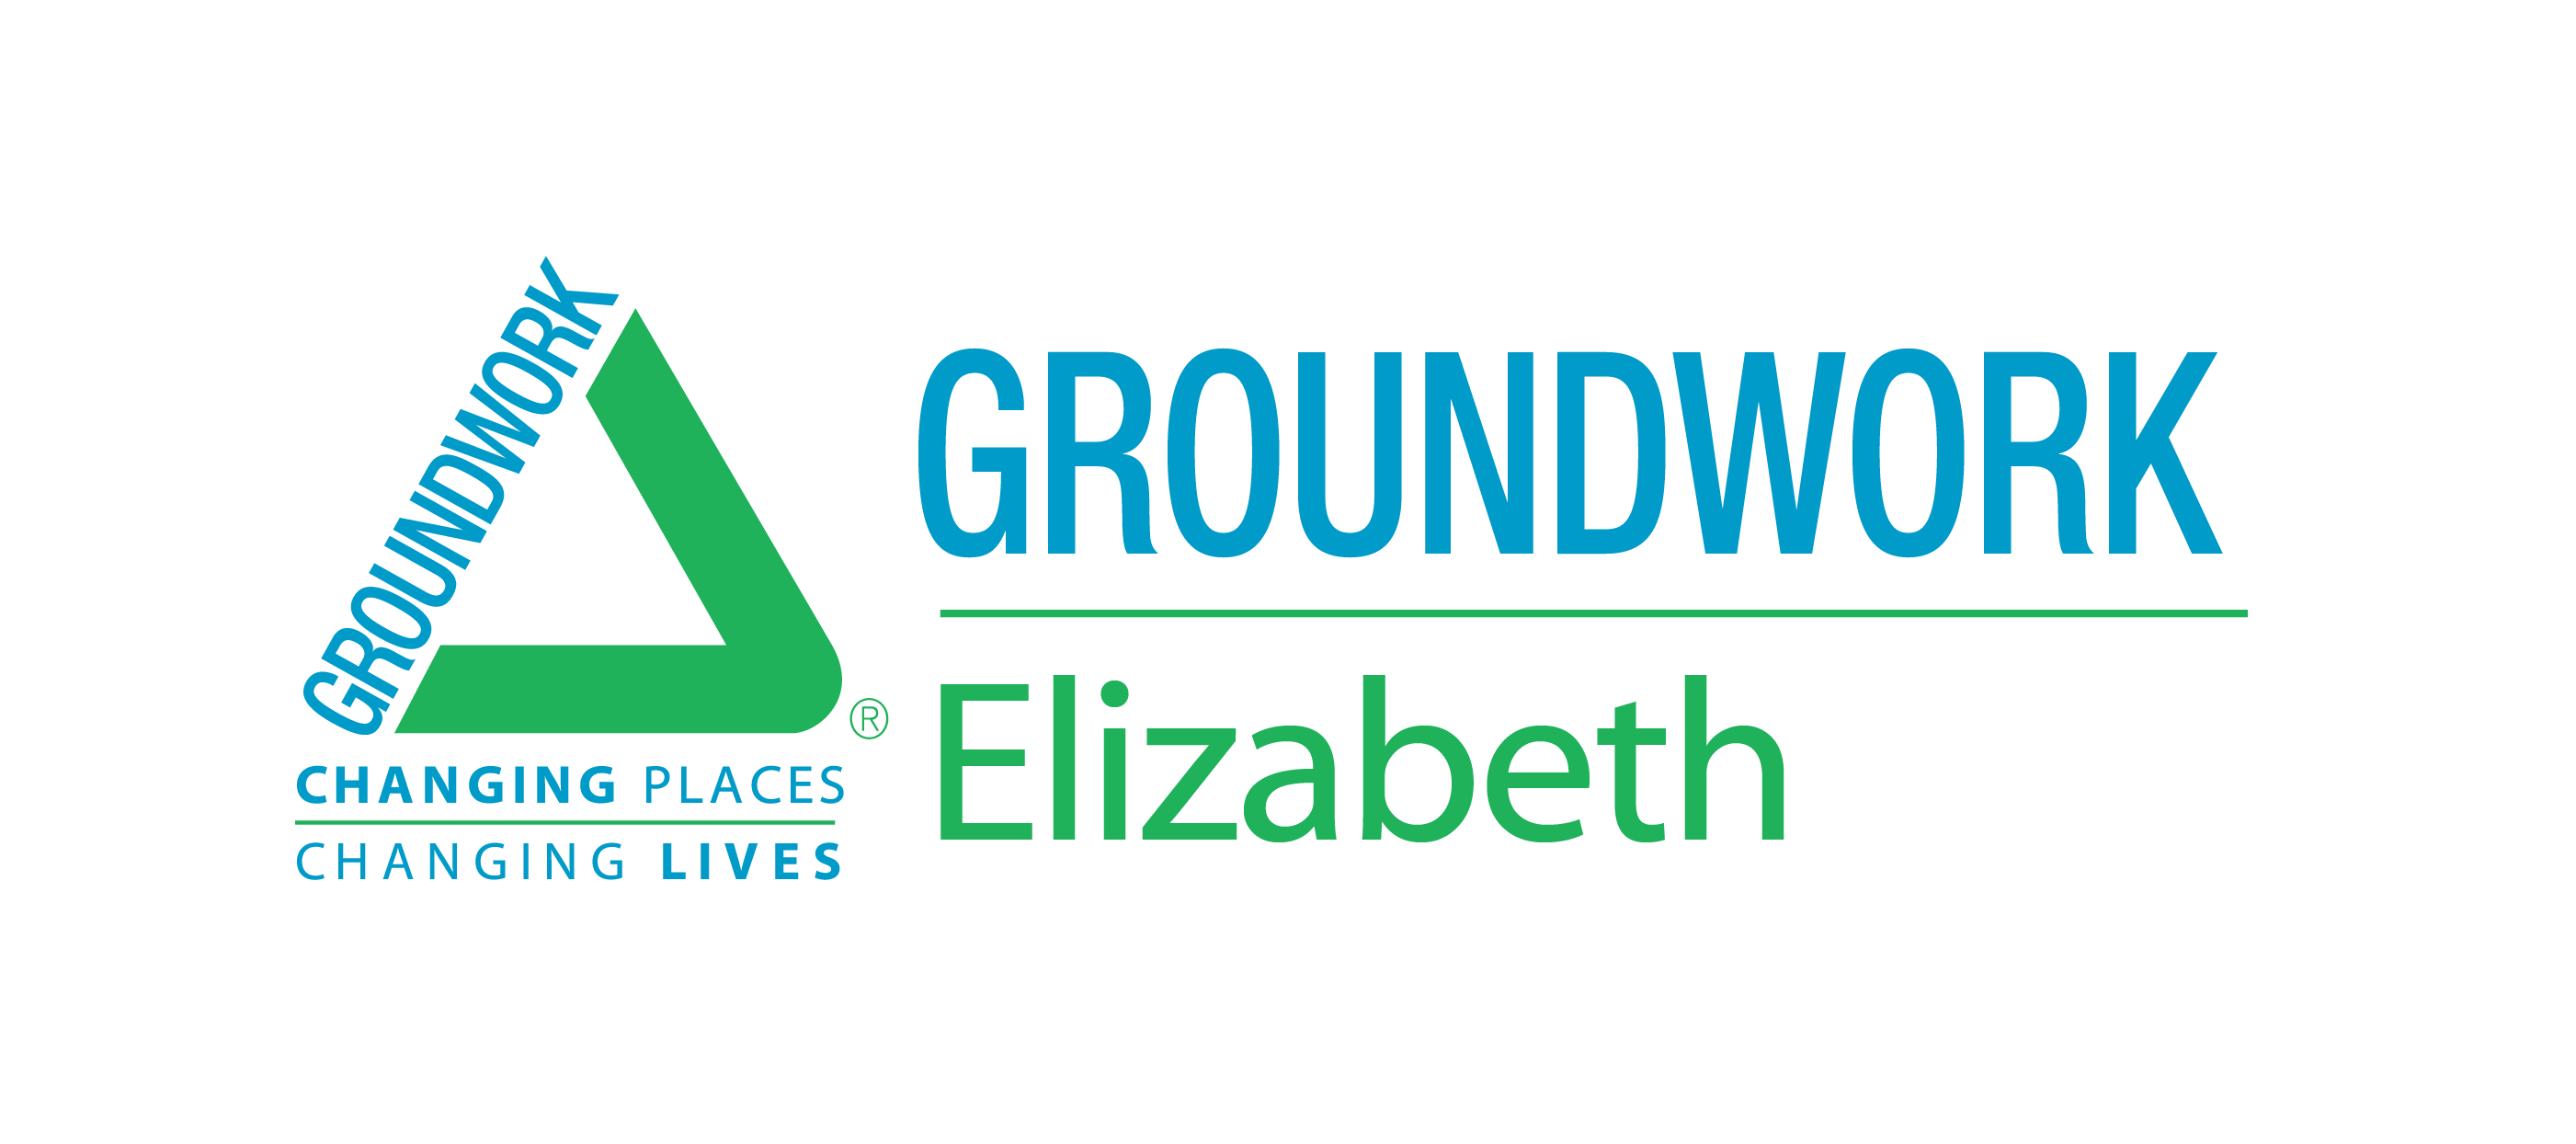 Groundwork Elizabeth logo